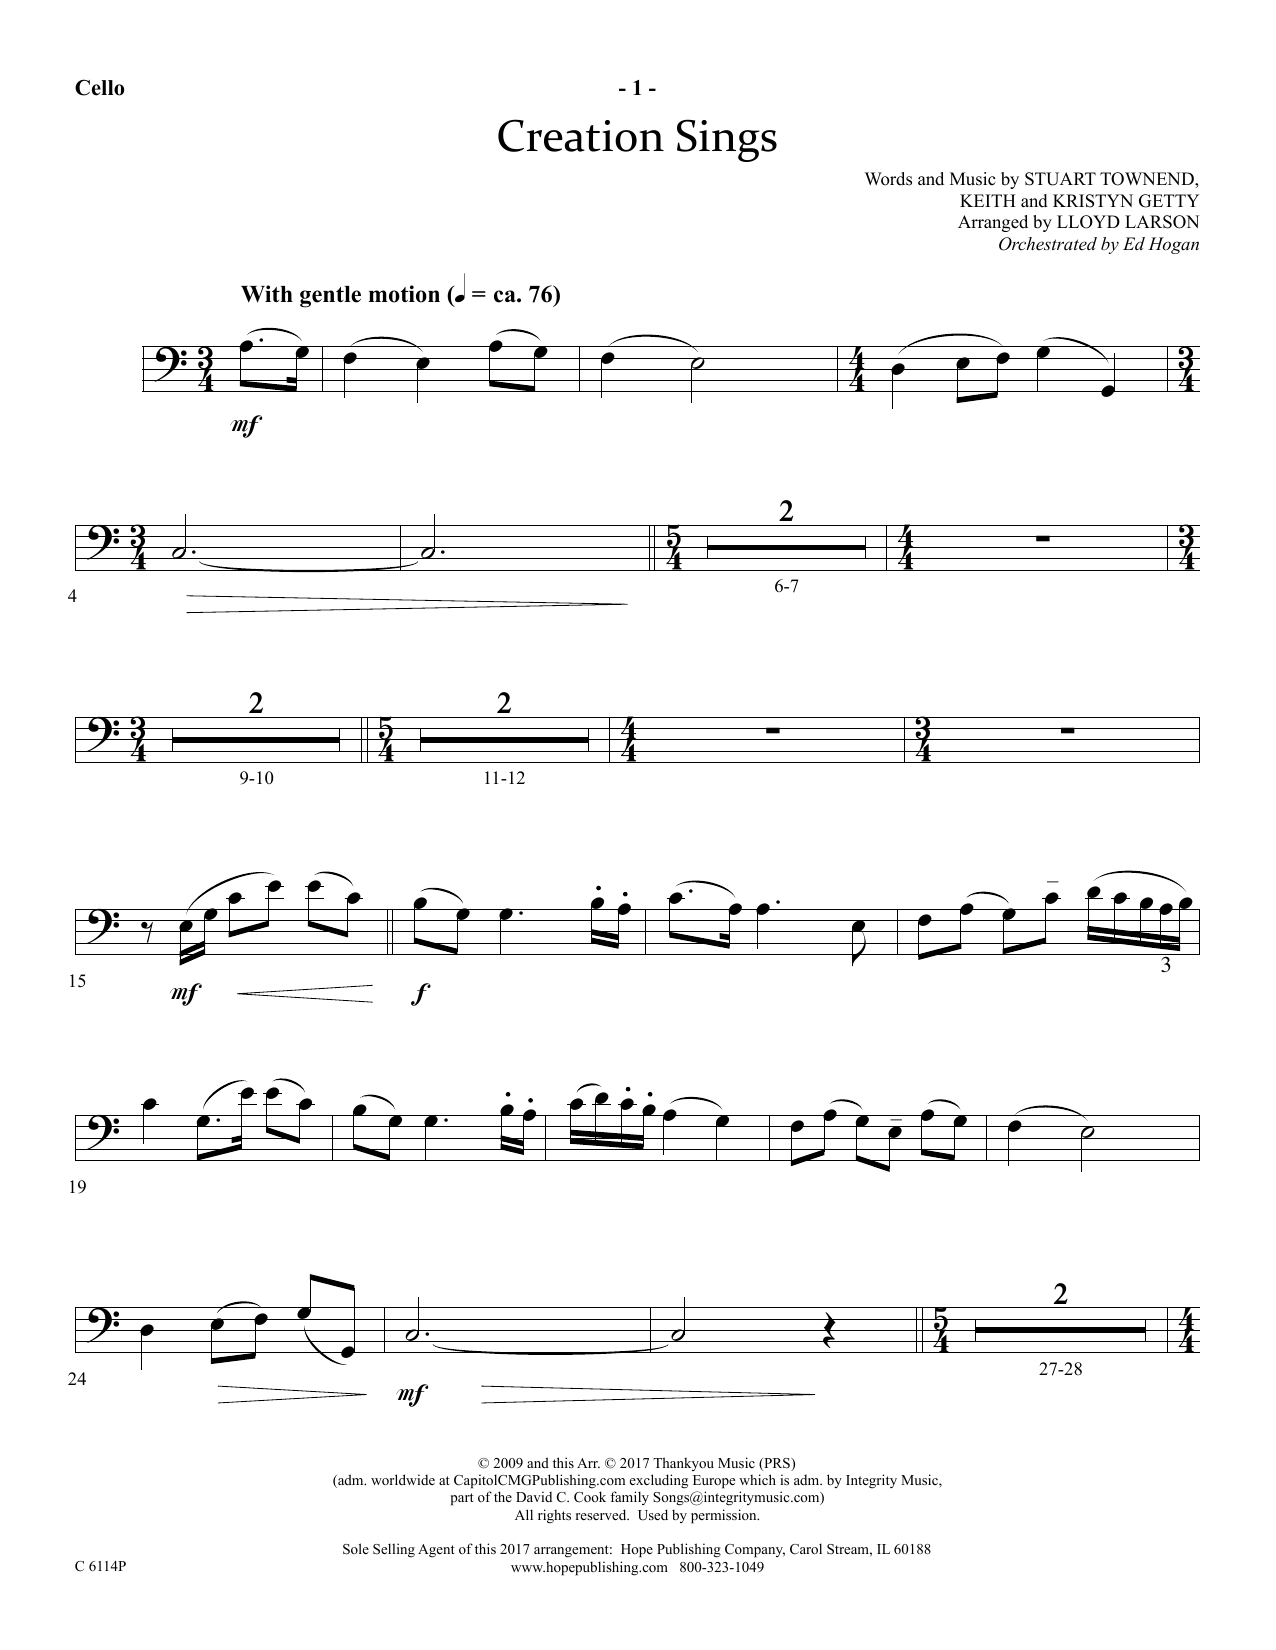 Lloyd Larson Creation Sings - Cello Sheet Music Notes & Chords for Choir Instrumental Pak - Download or Print PDF